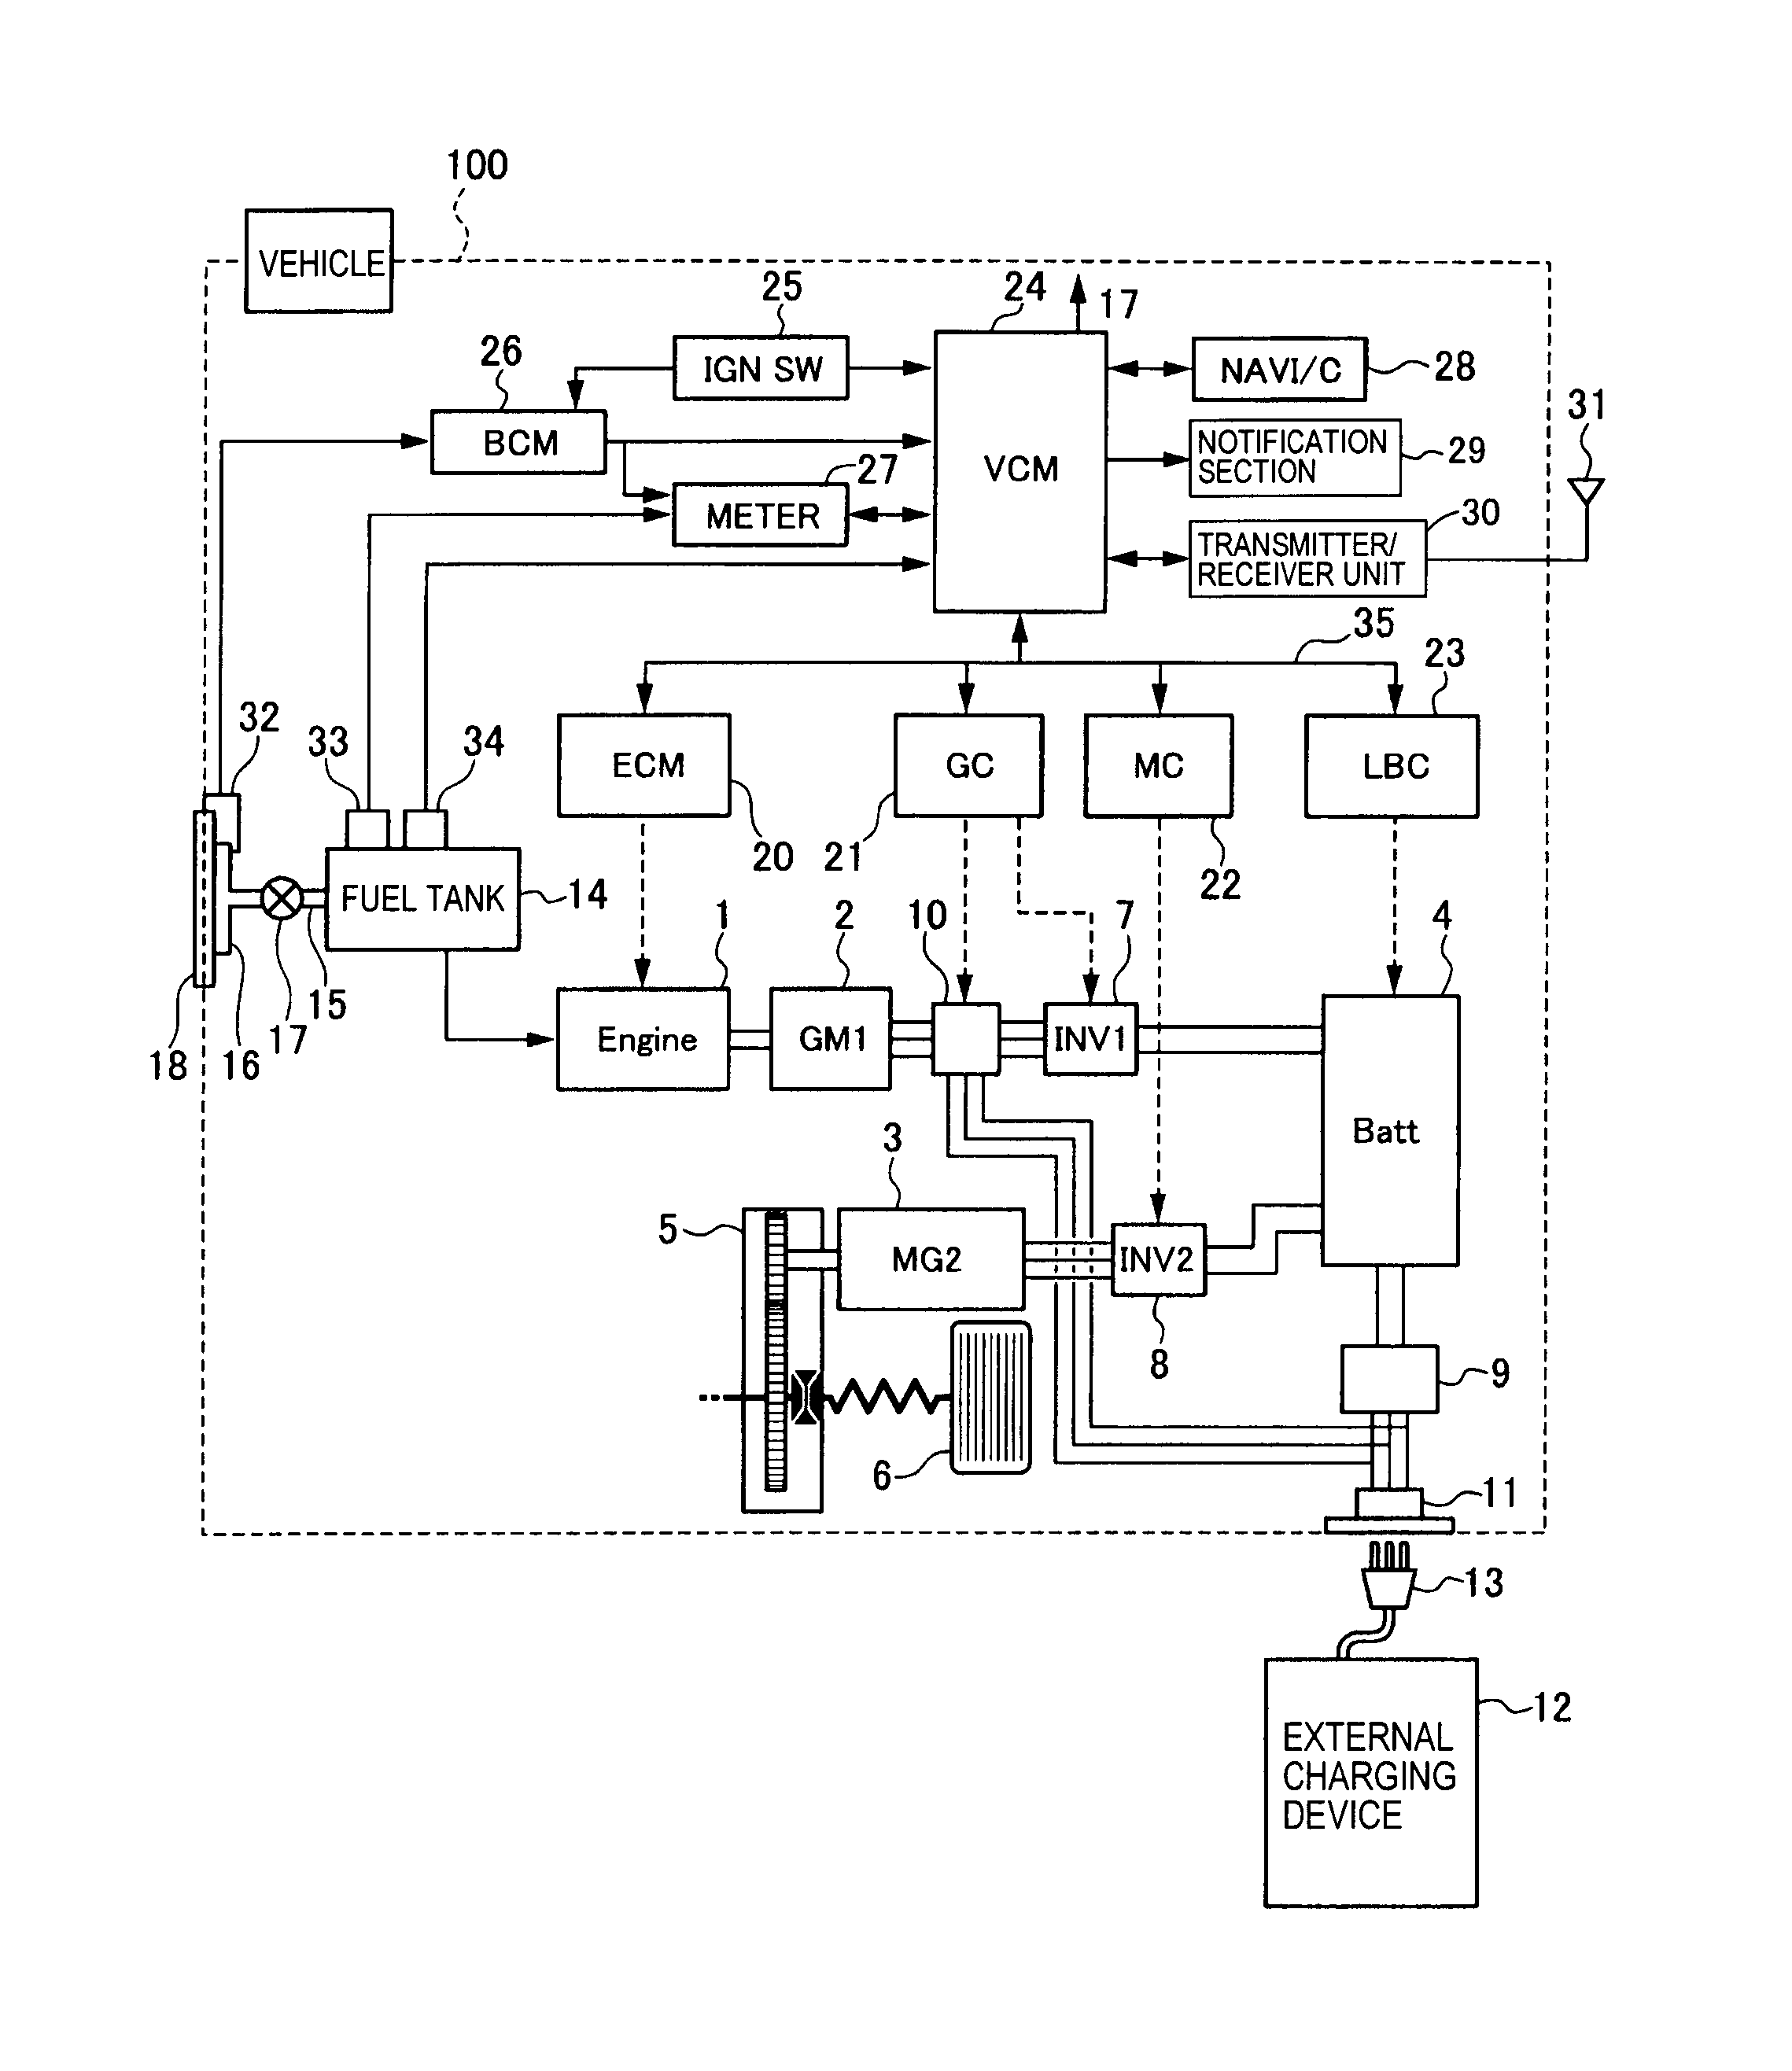 valcom paging horn wiring diagram